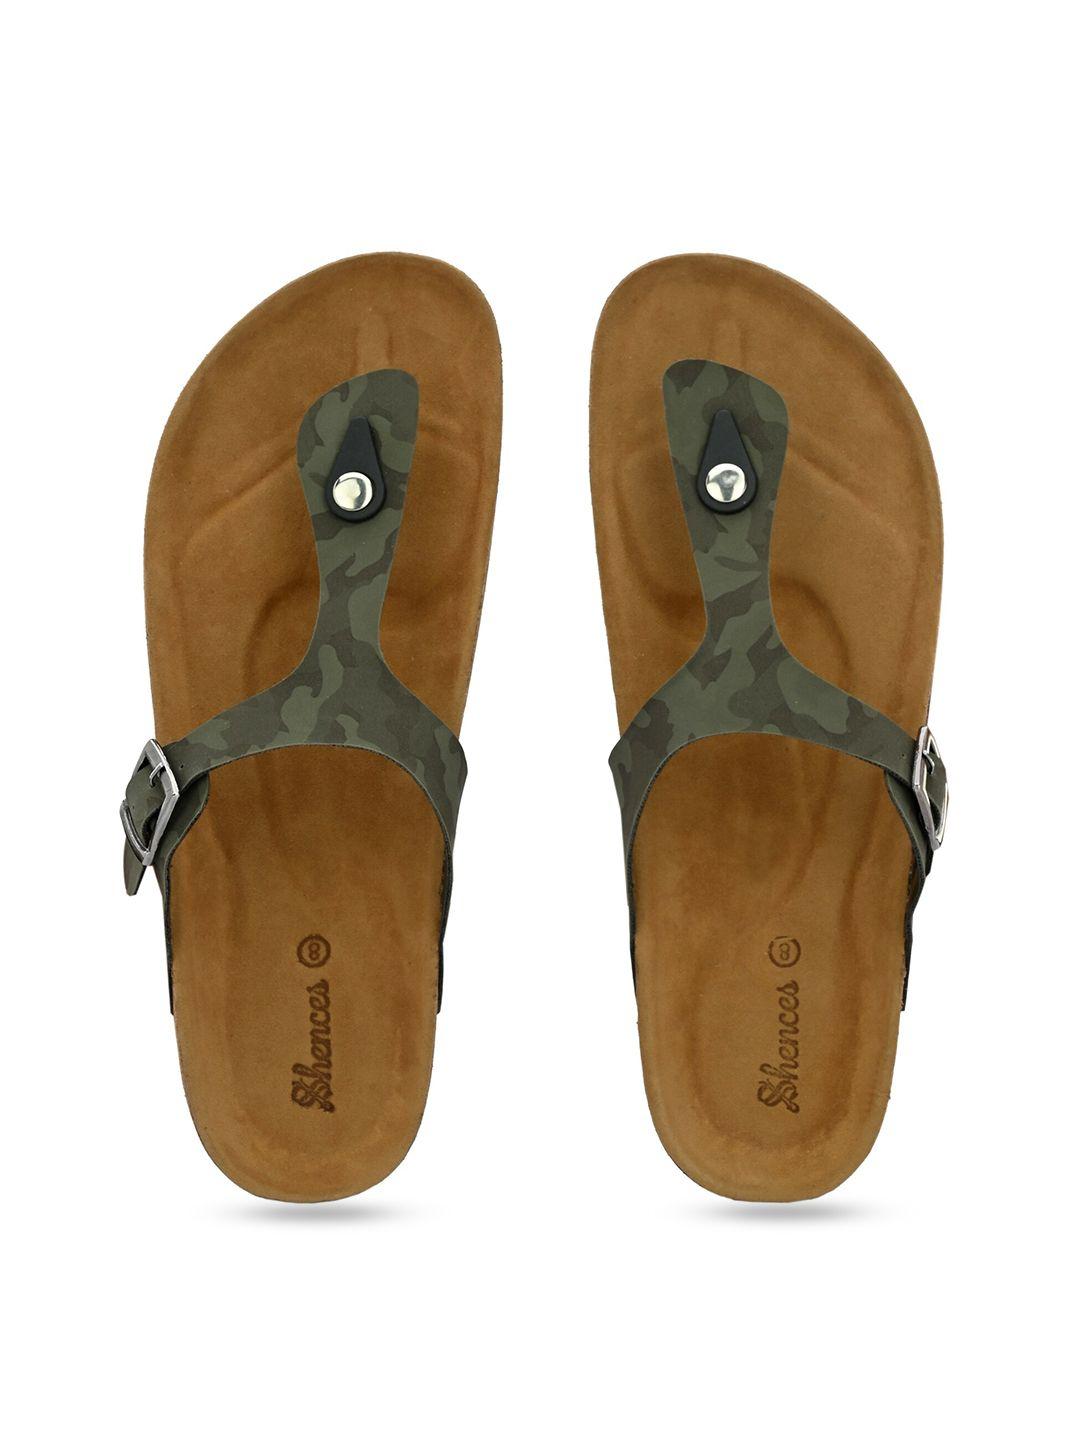 shences men shences cork  printed open toe comfort sandals with buckle detail